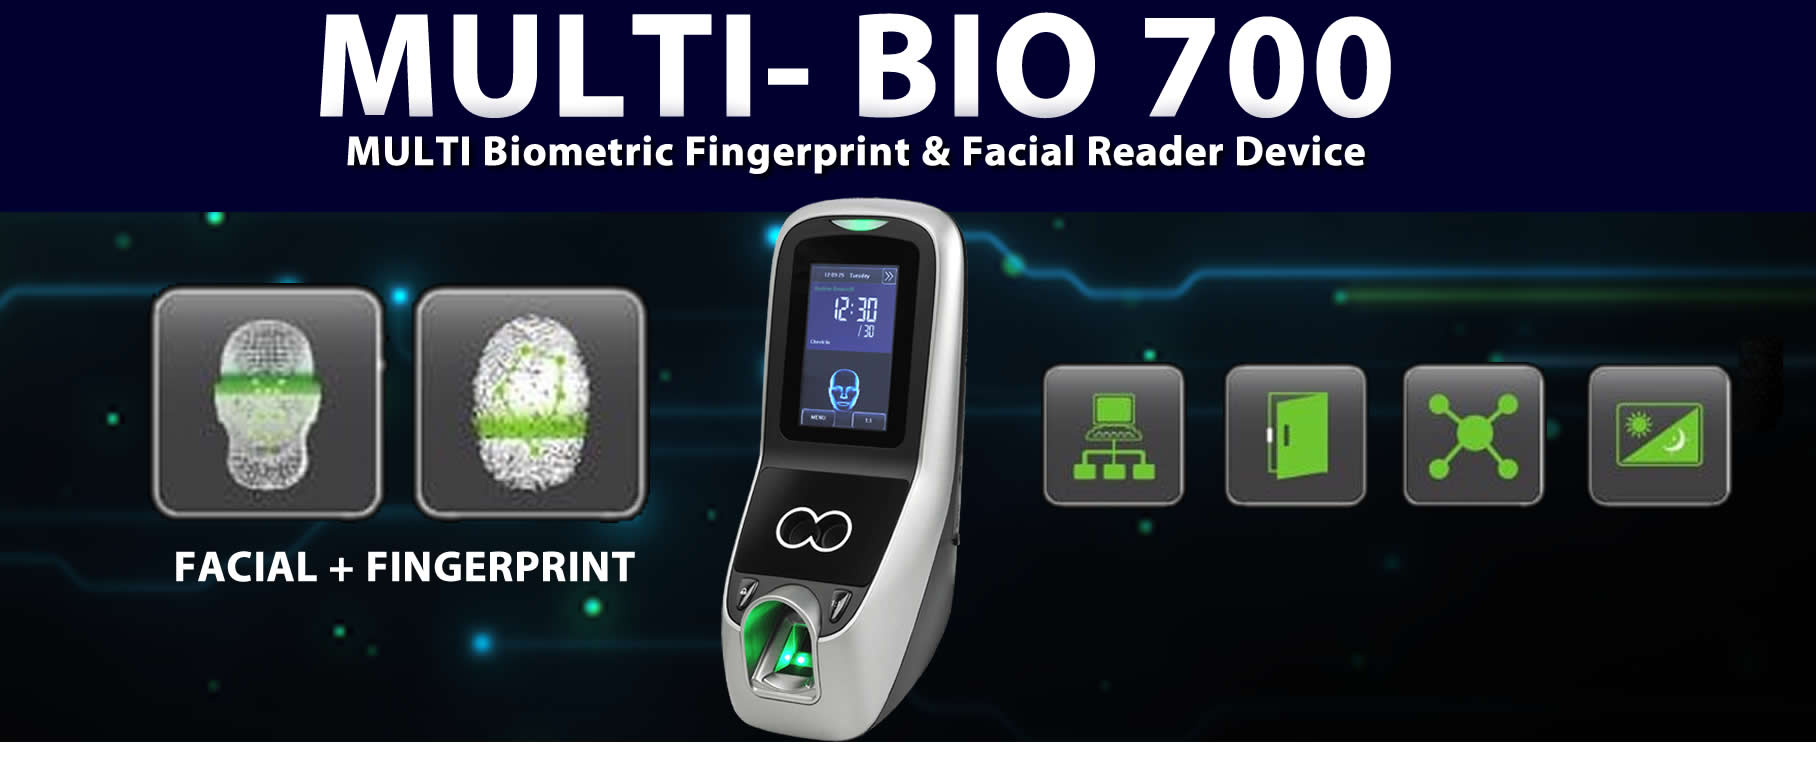 multi biometric Fingerprint reader device